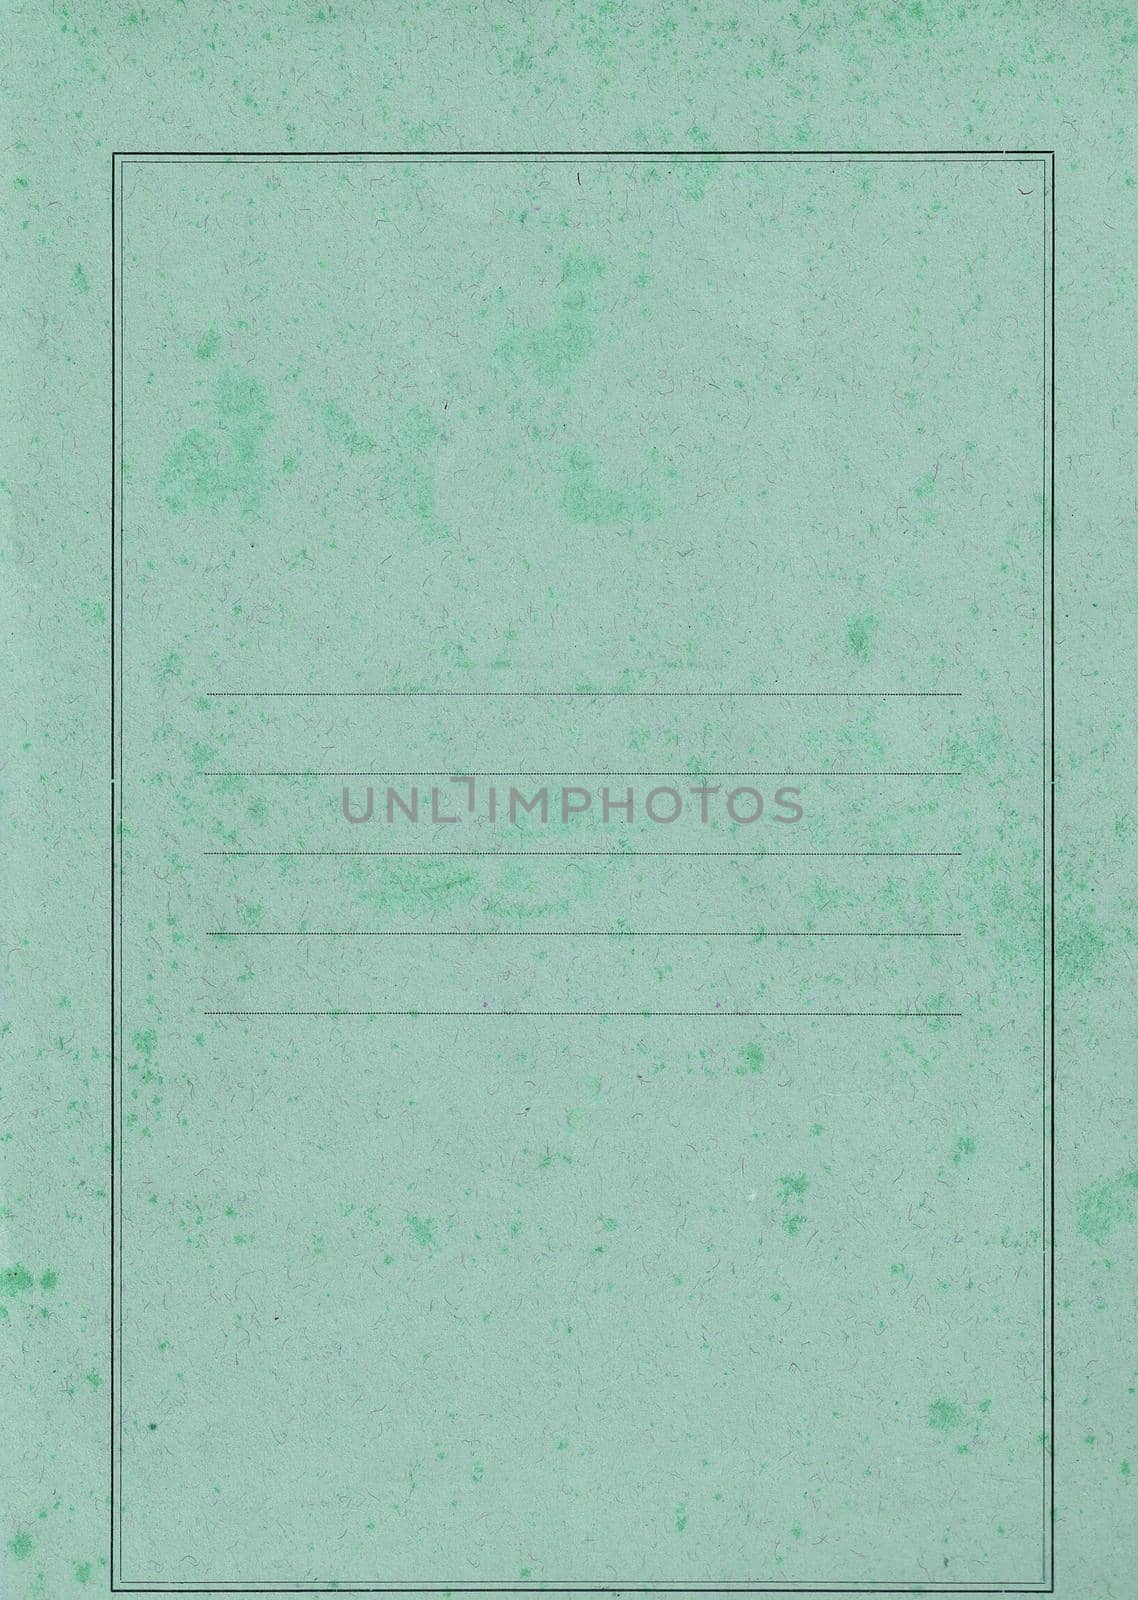 light green cardboard texture useful as a background